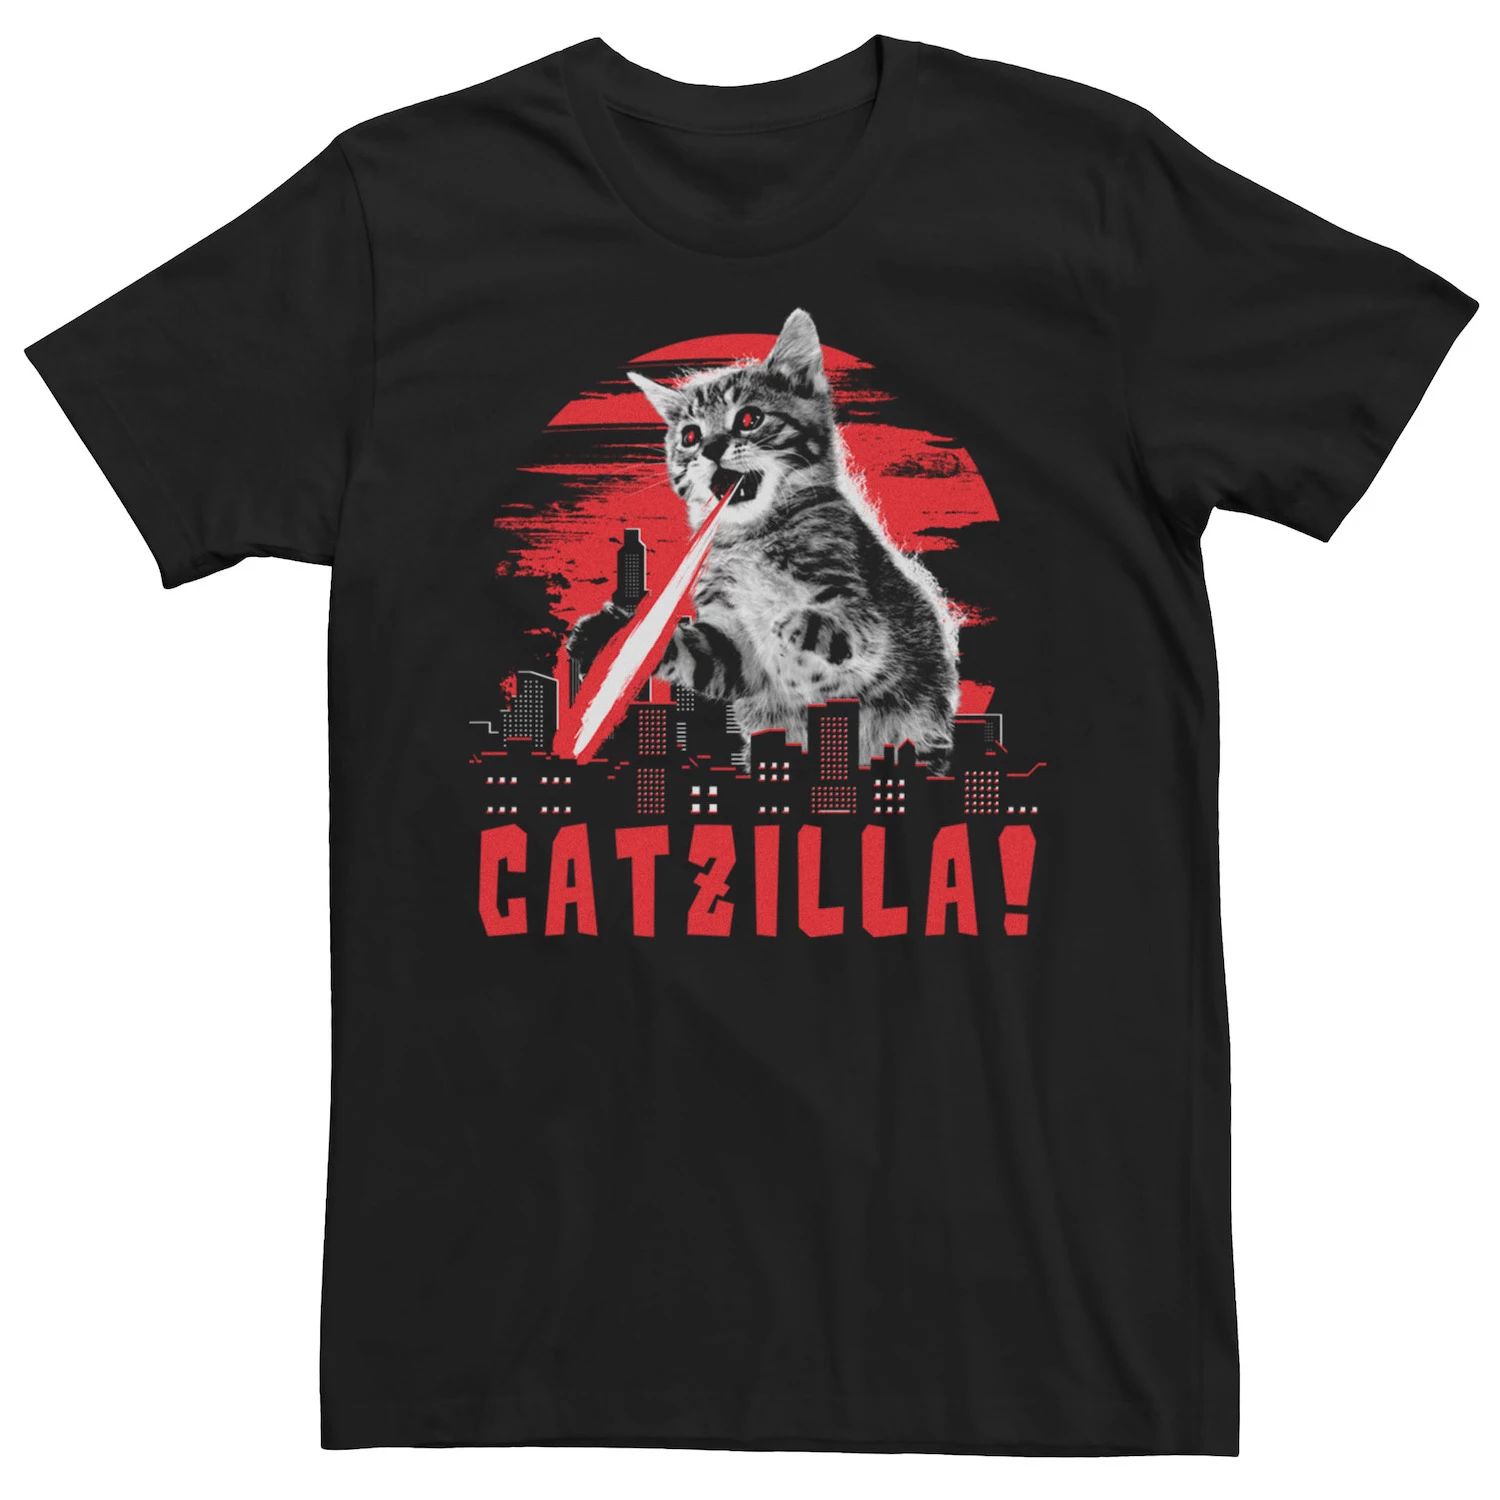 Мужская футболка с рисунком Catzilla Licensed Character, черный